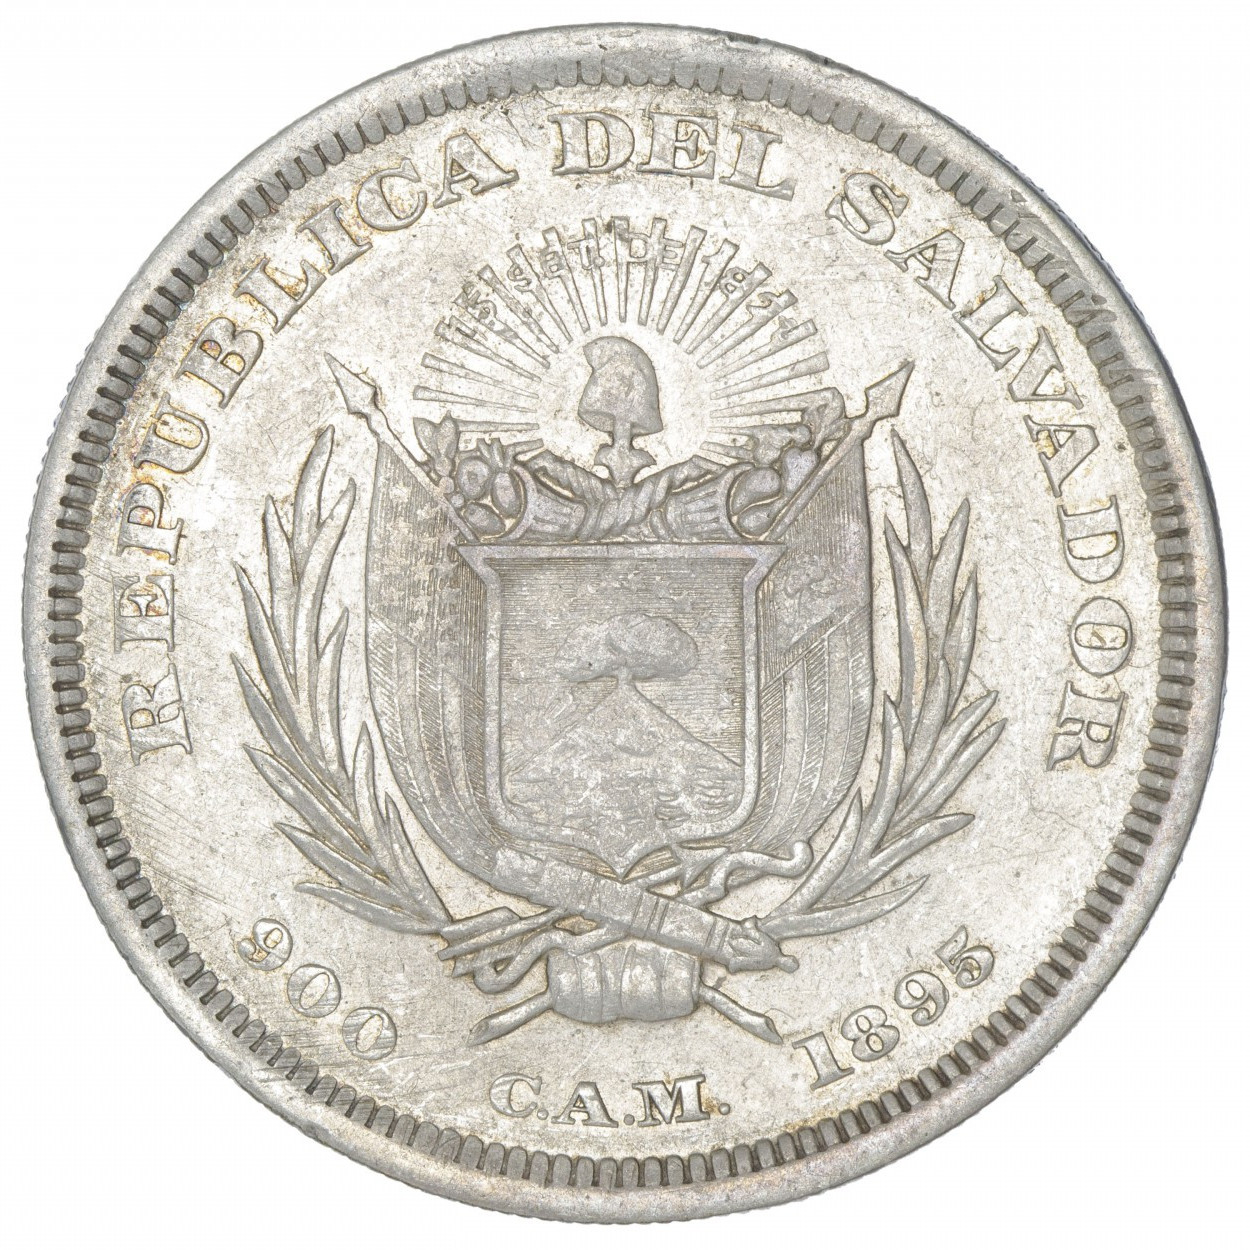 Salvador - Un peso - 1895 revers